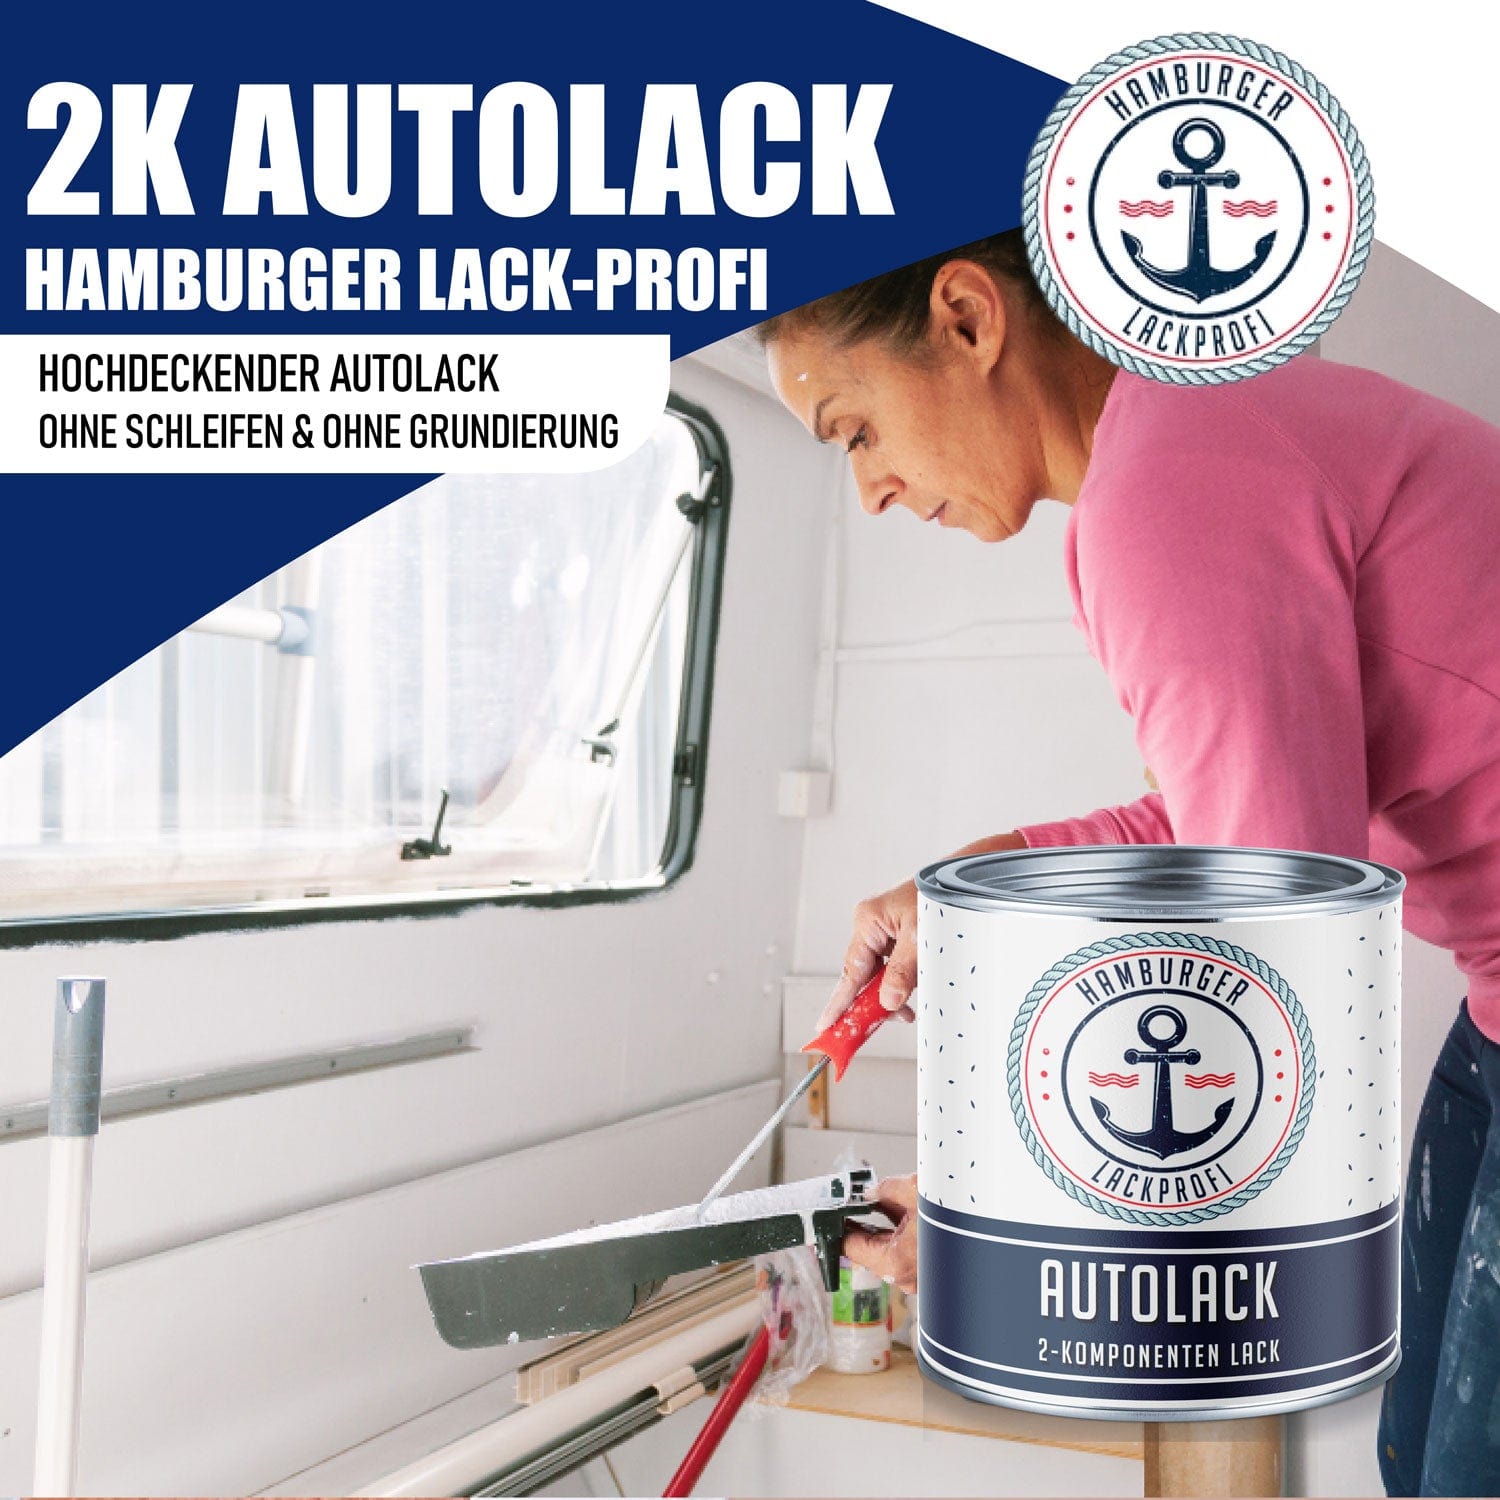 Hamburger Lack-Profi Lacke & Beschichtungen Hamburger Lack-Profi 2K Autolack in Signalrot RAL 3001 mit Lackierset (X300) & Verdünnung (1 L) - 30% Sparangebot